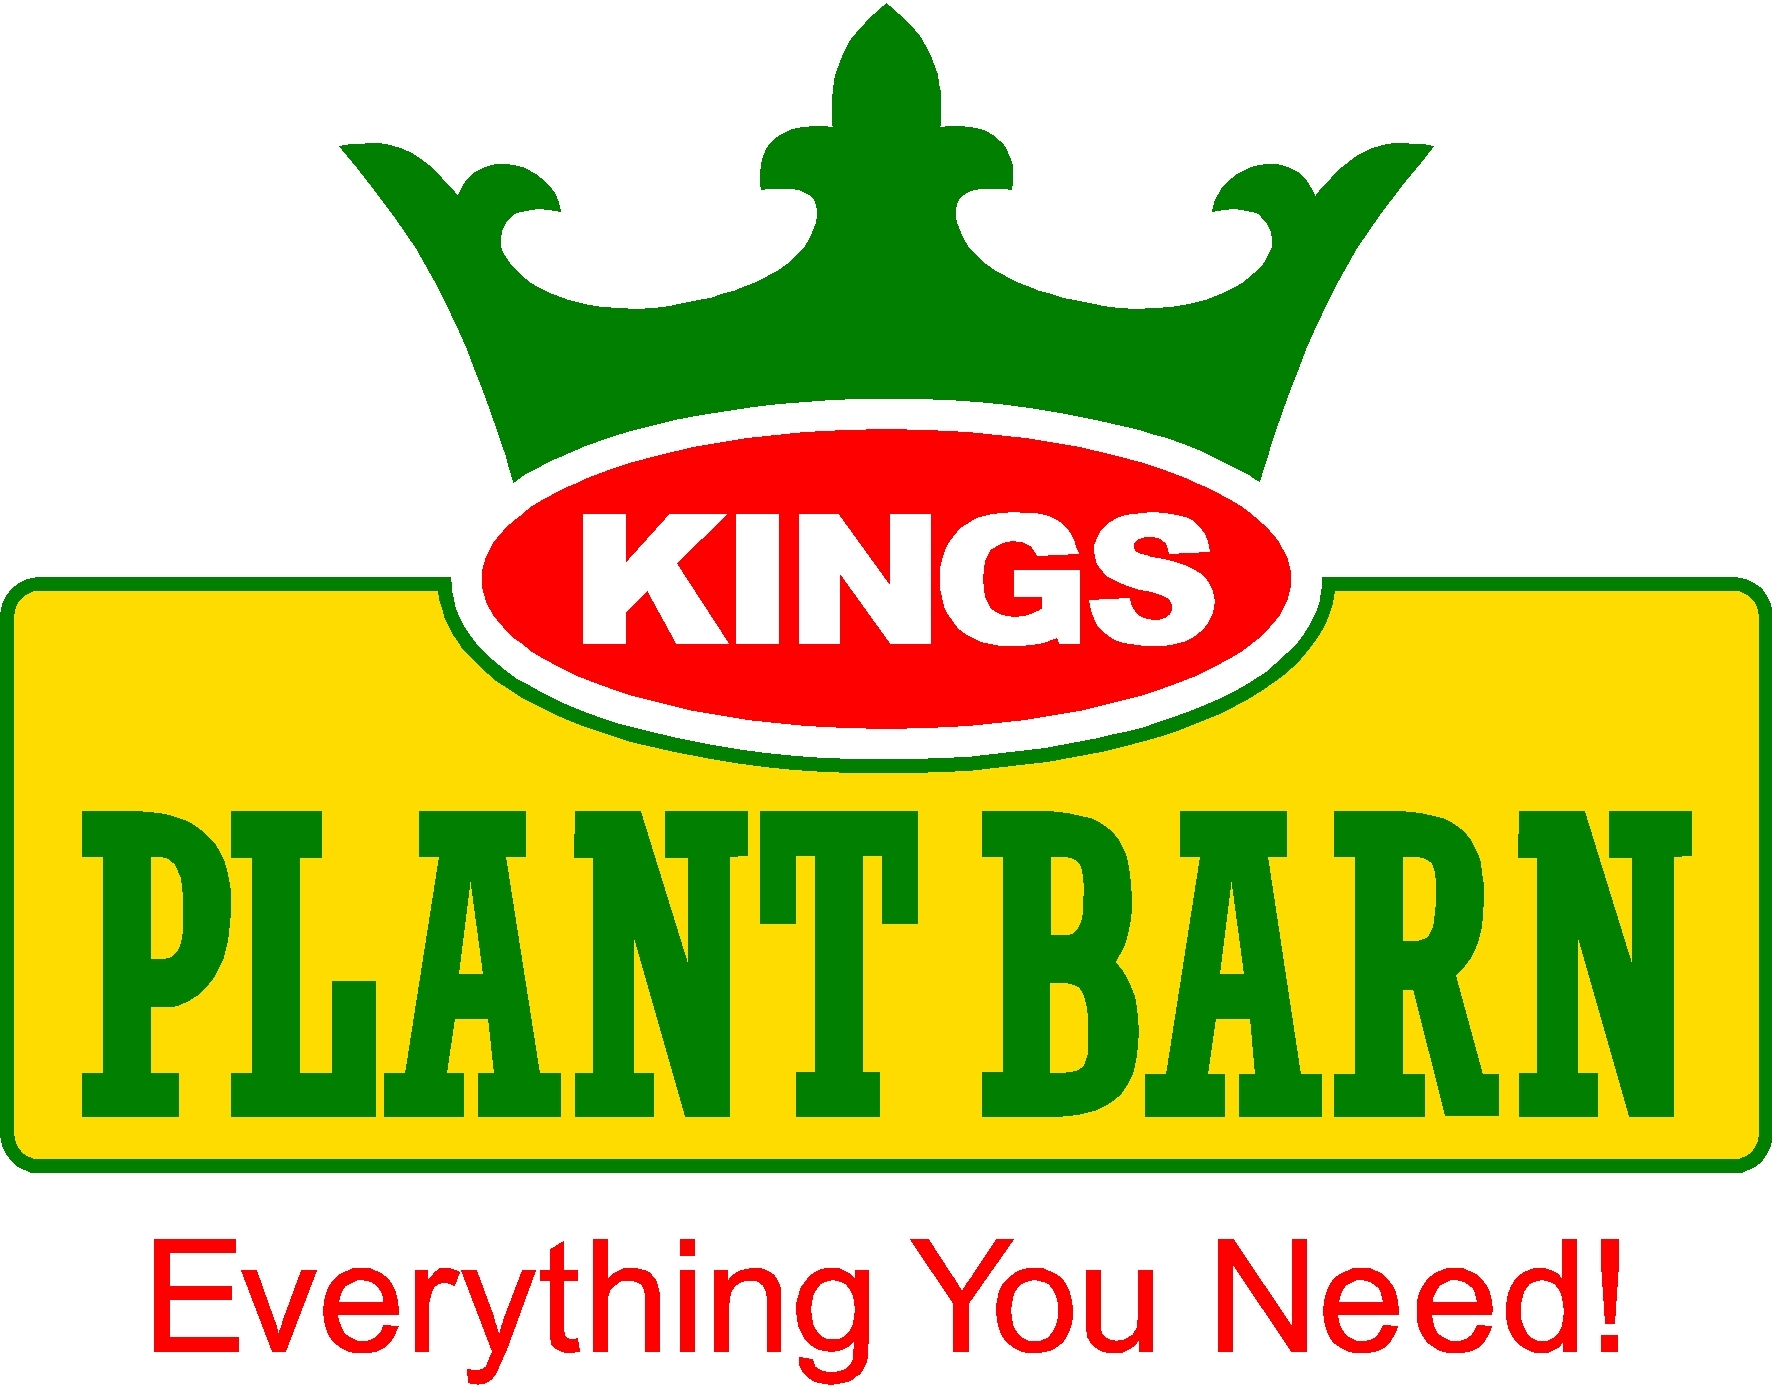 Kings Plant Barn Takanini, Auckland